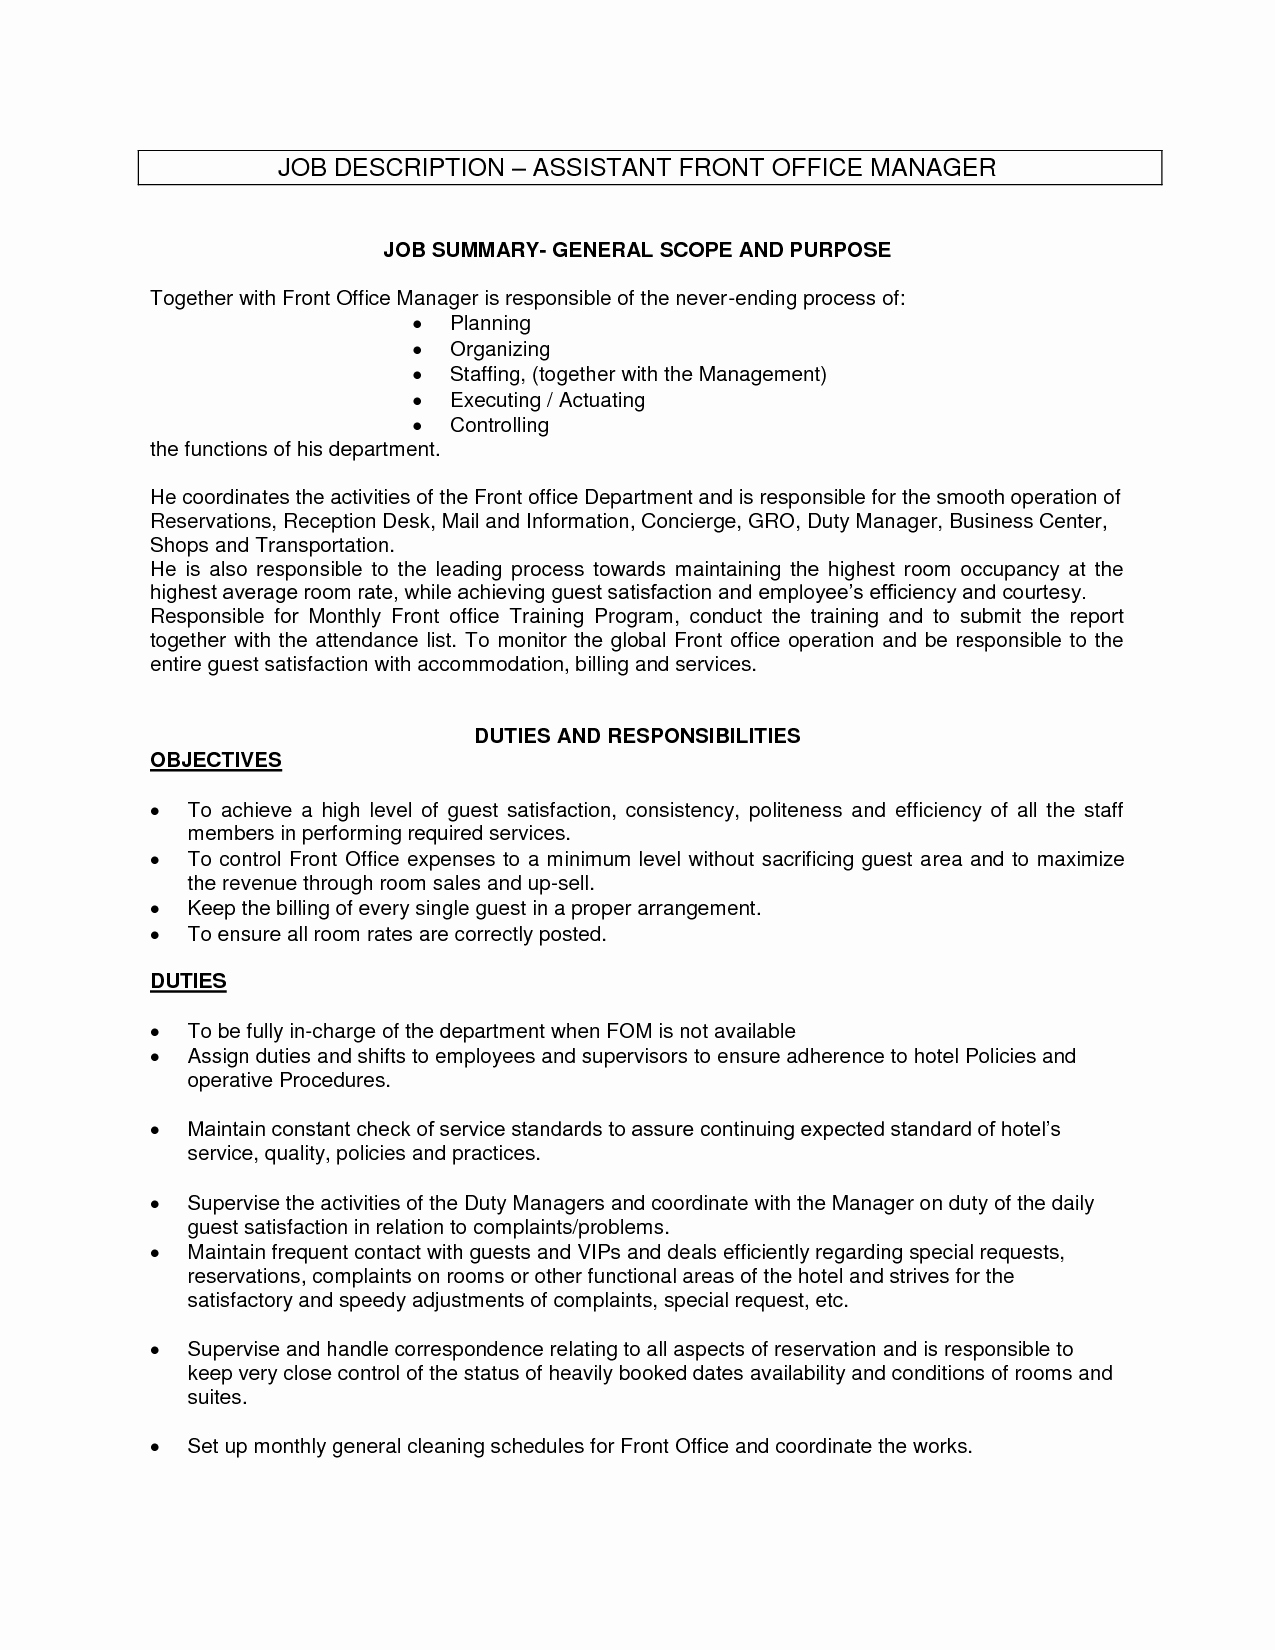 Medical Fice assistant Job Description for Resume